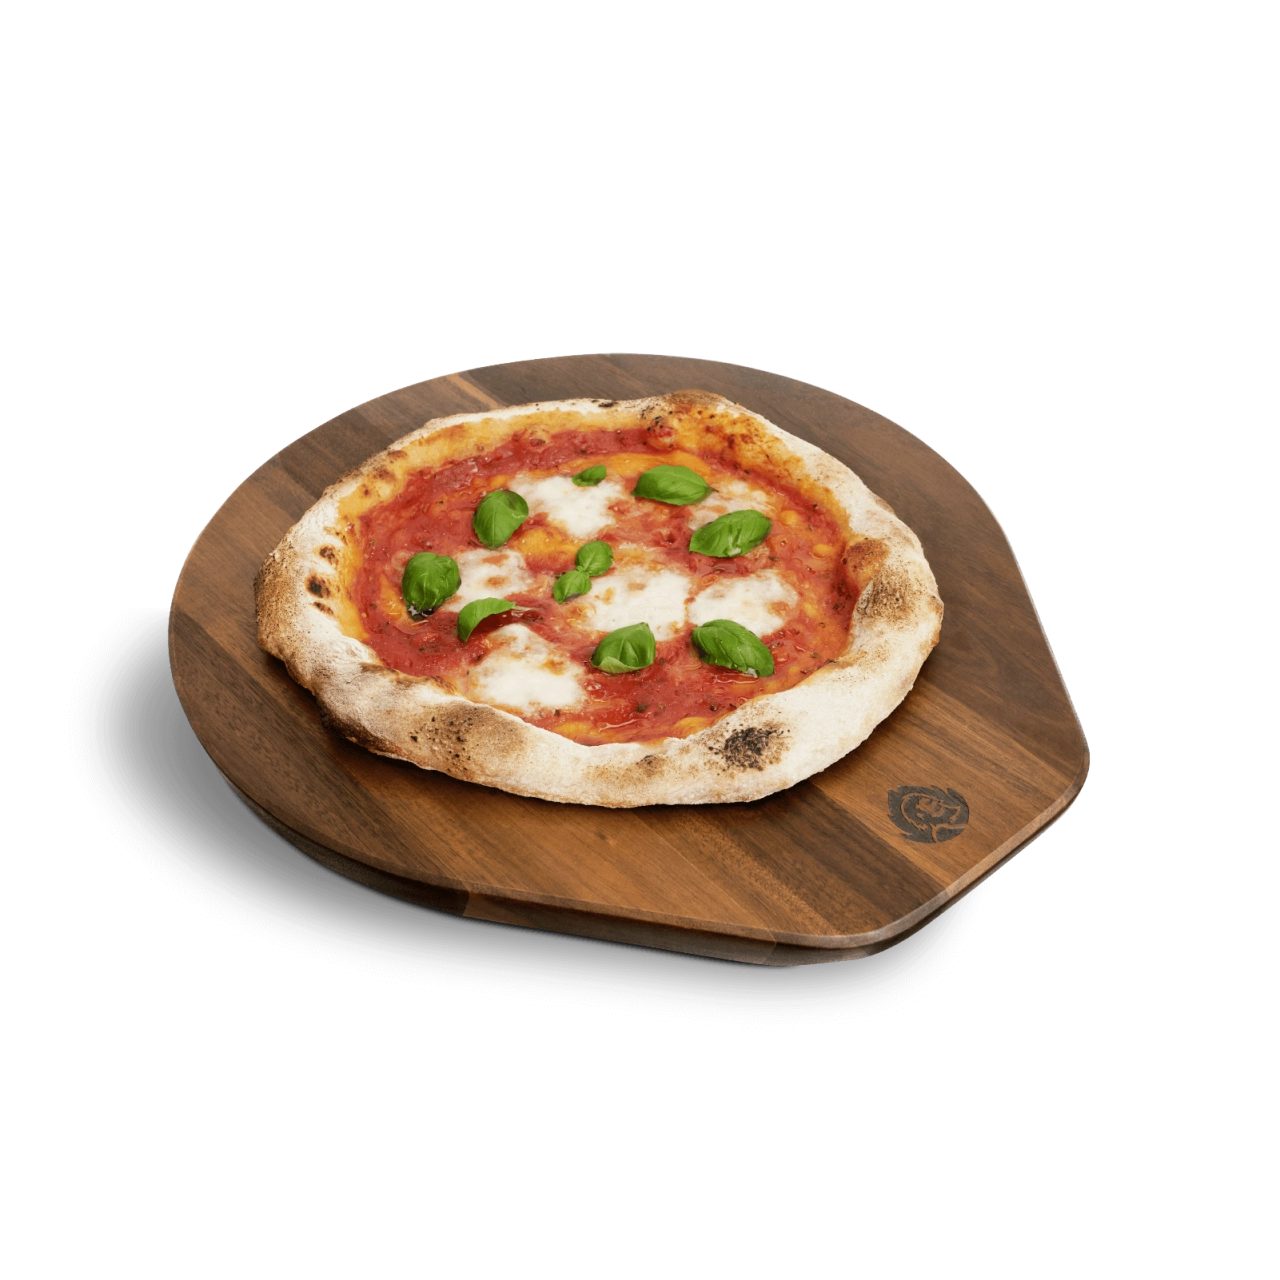 BURNHARD Pizzastein Pizzabrett Akazienholz, Akazienholz, FSC zertifiziert